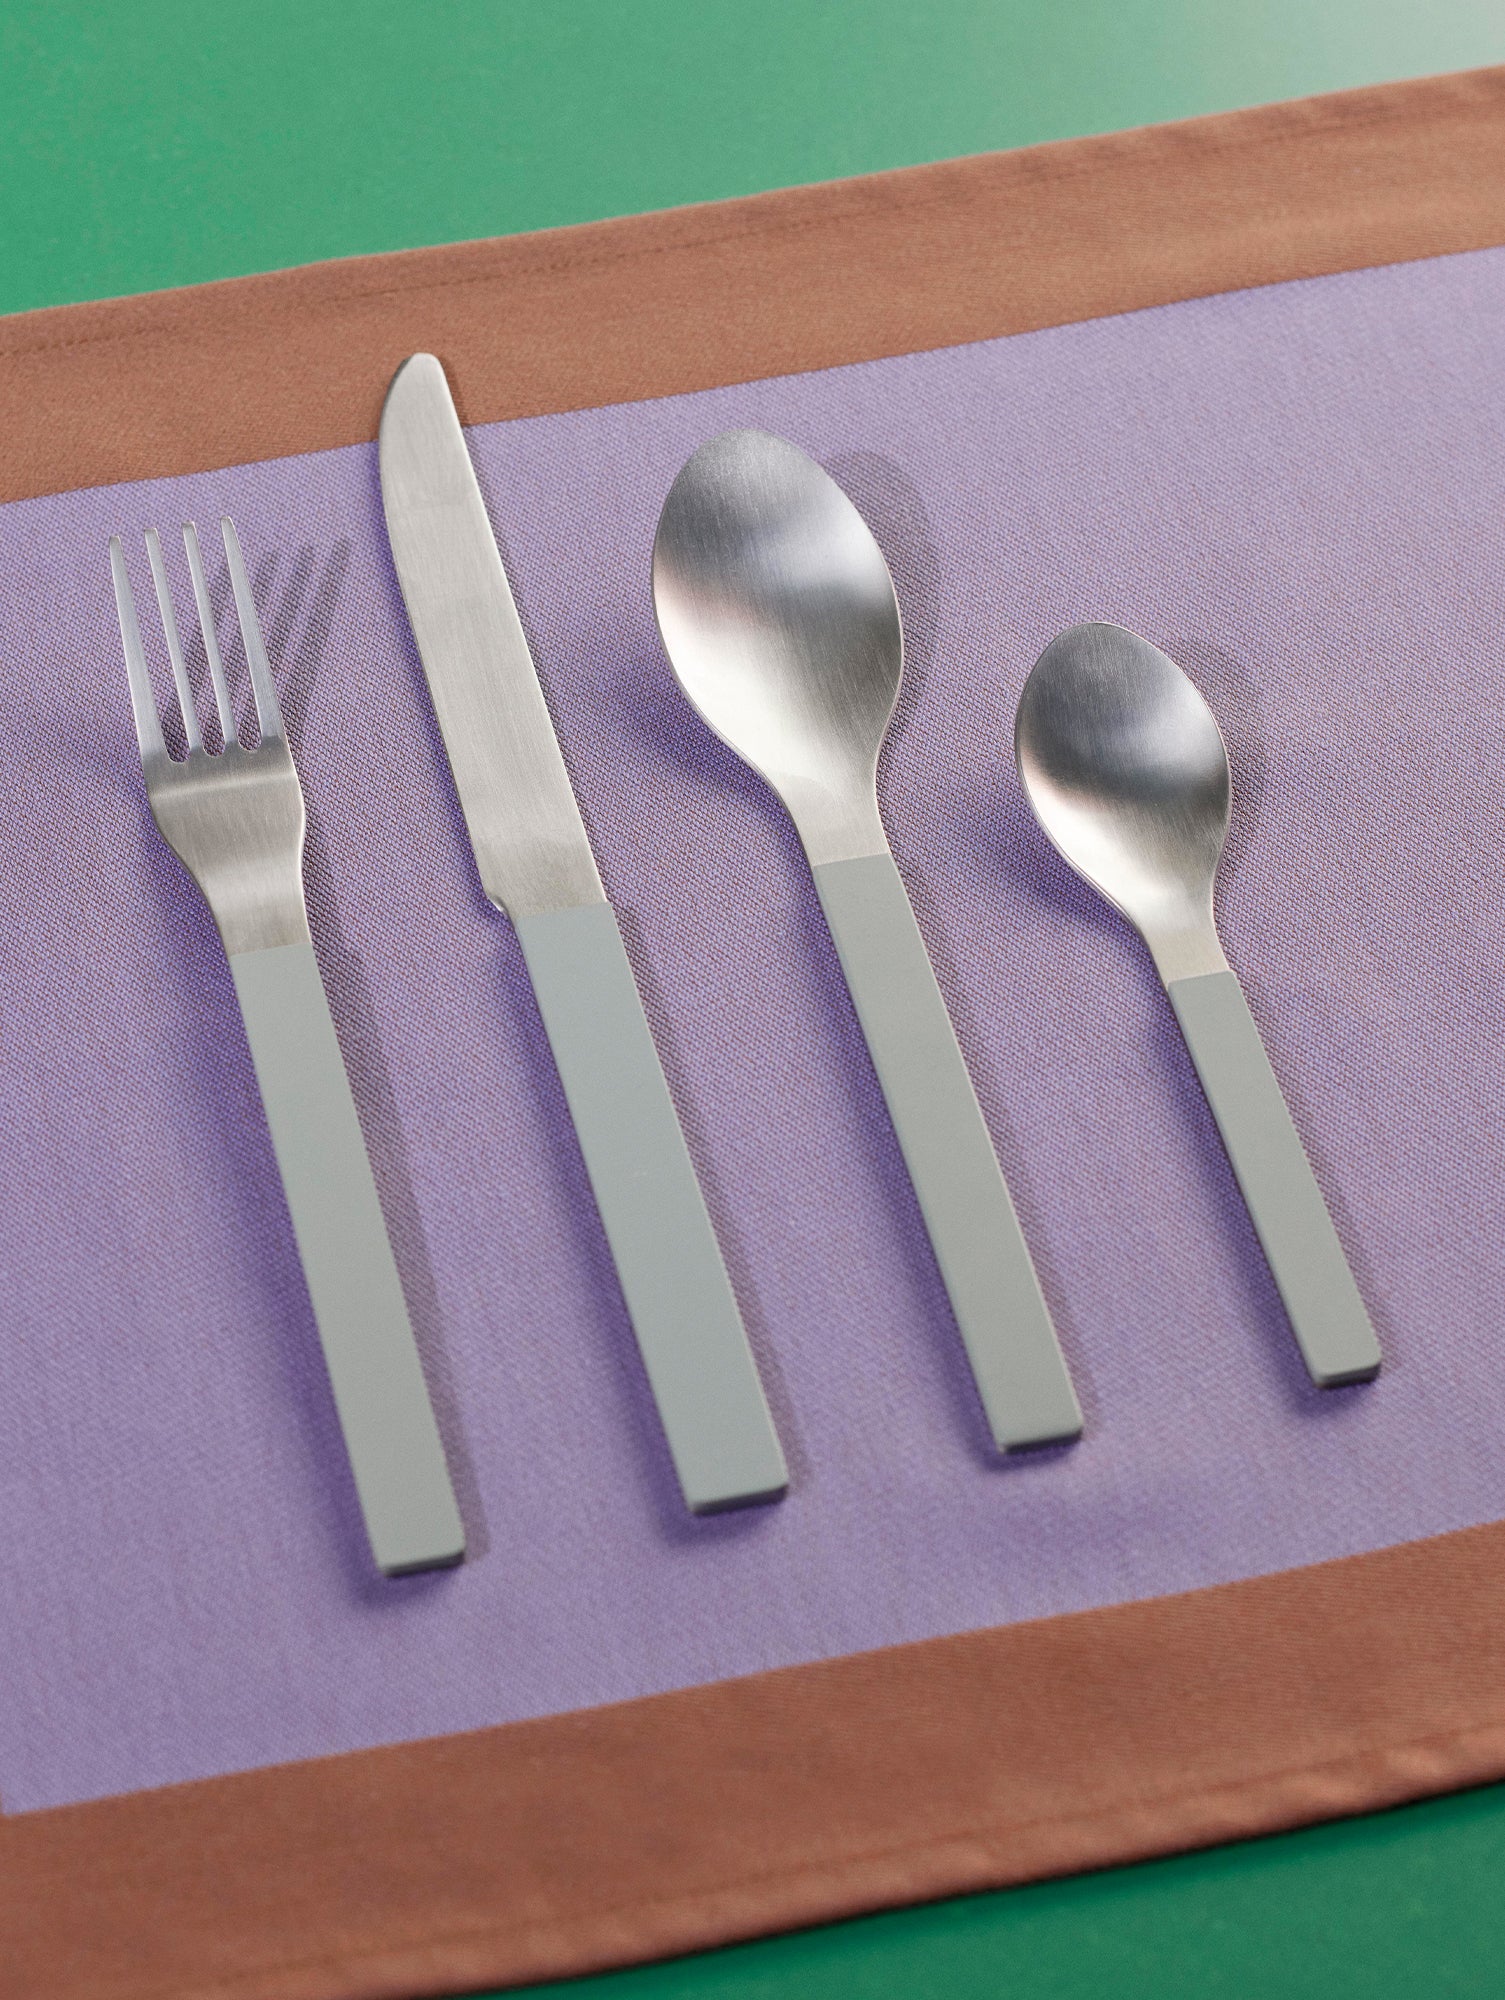 MVS Cutlery - Set of 4 by HAY - Green